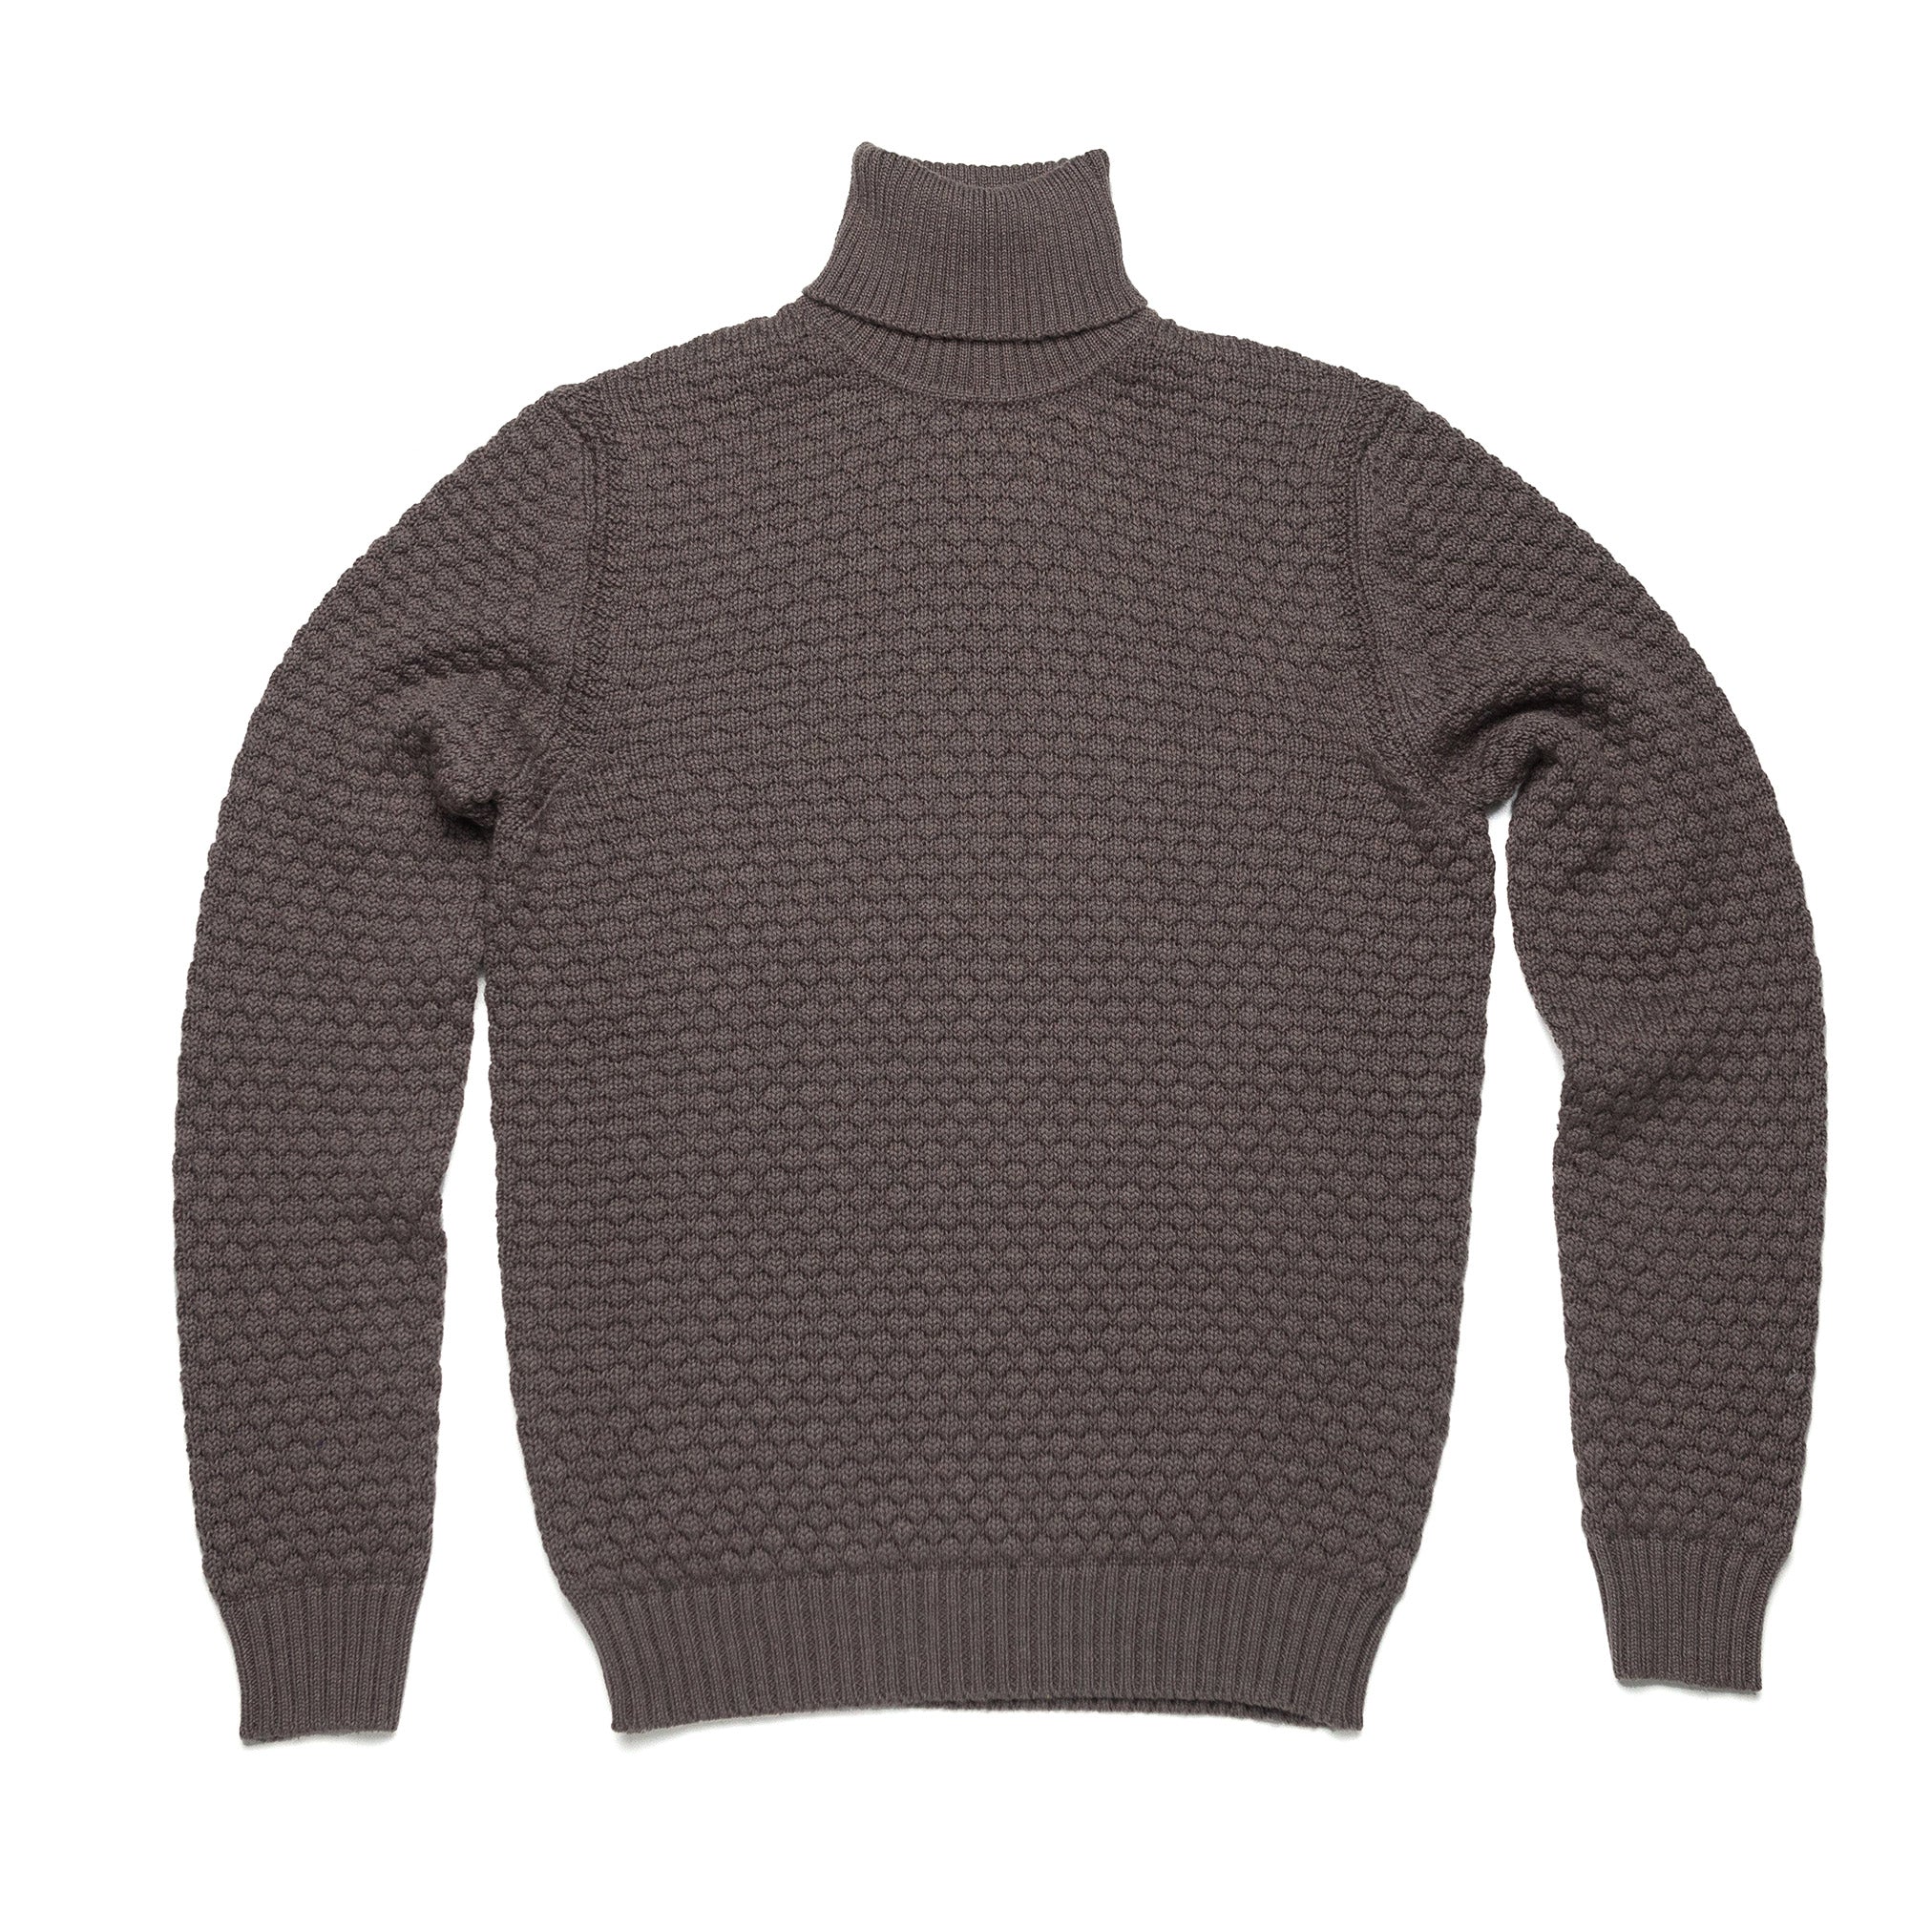 The Hubbell Sweater in Castoro